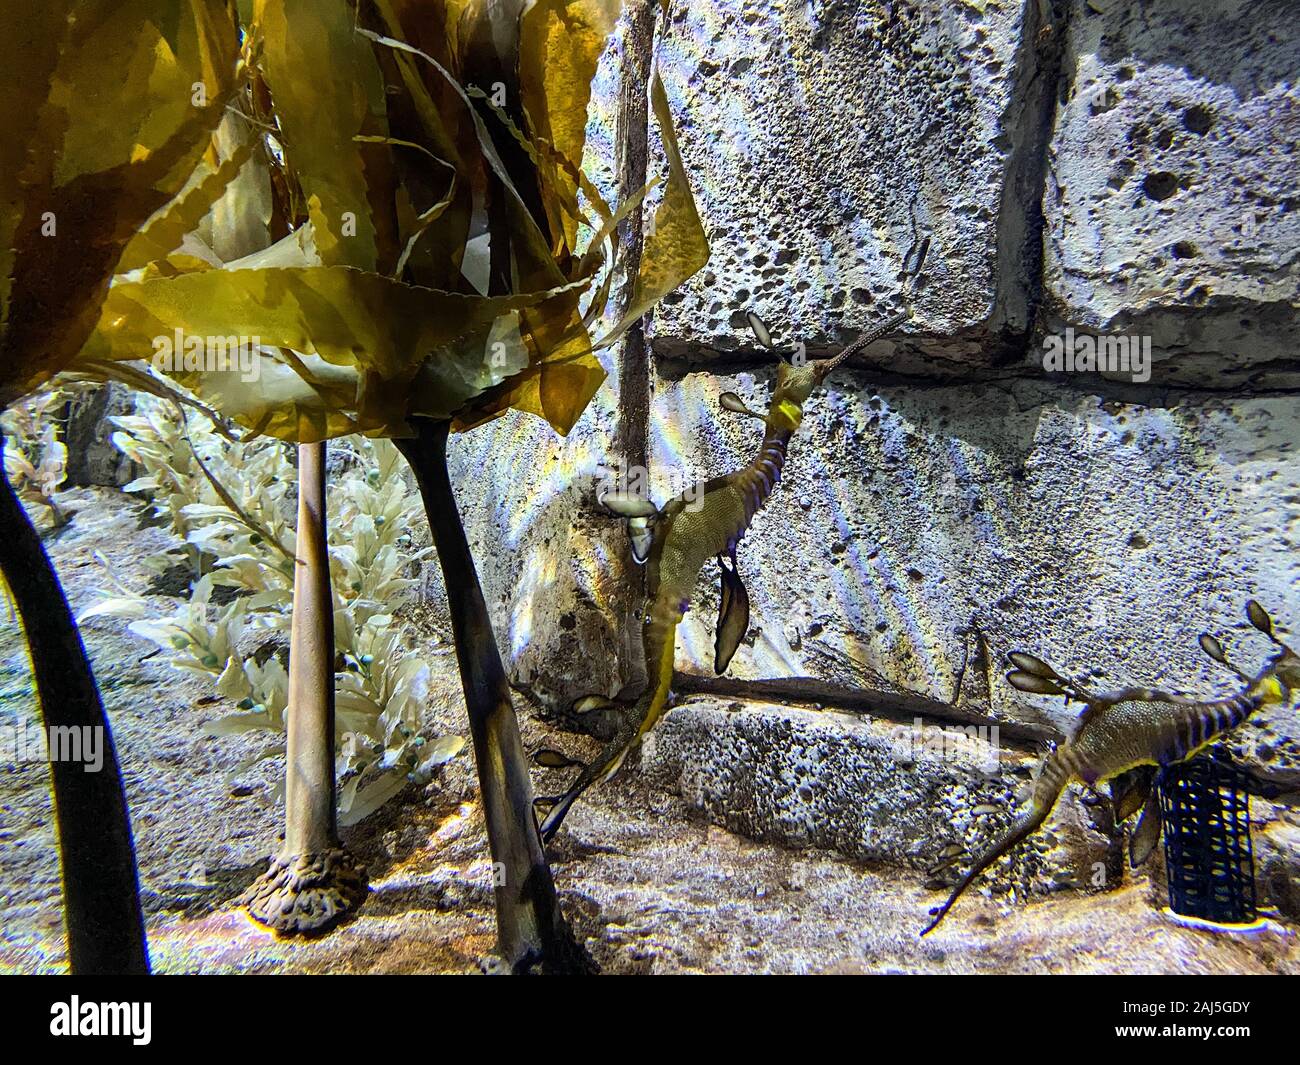 Orlando,FL/USA-12/25/19: An aquarium of swimming Leafy Sea Dragons at Seaworld Orlando Florida. Stock Photo